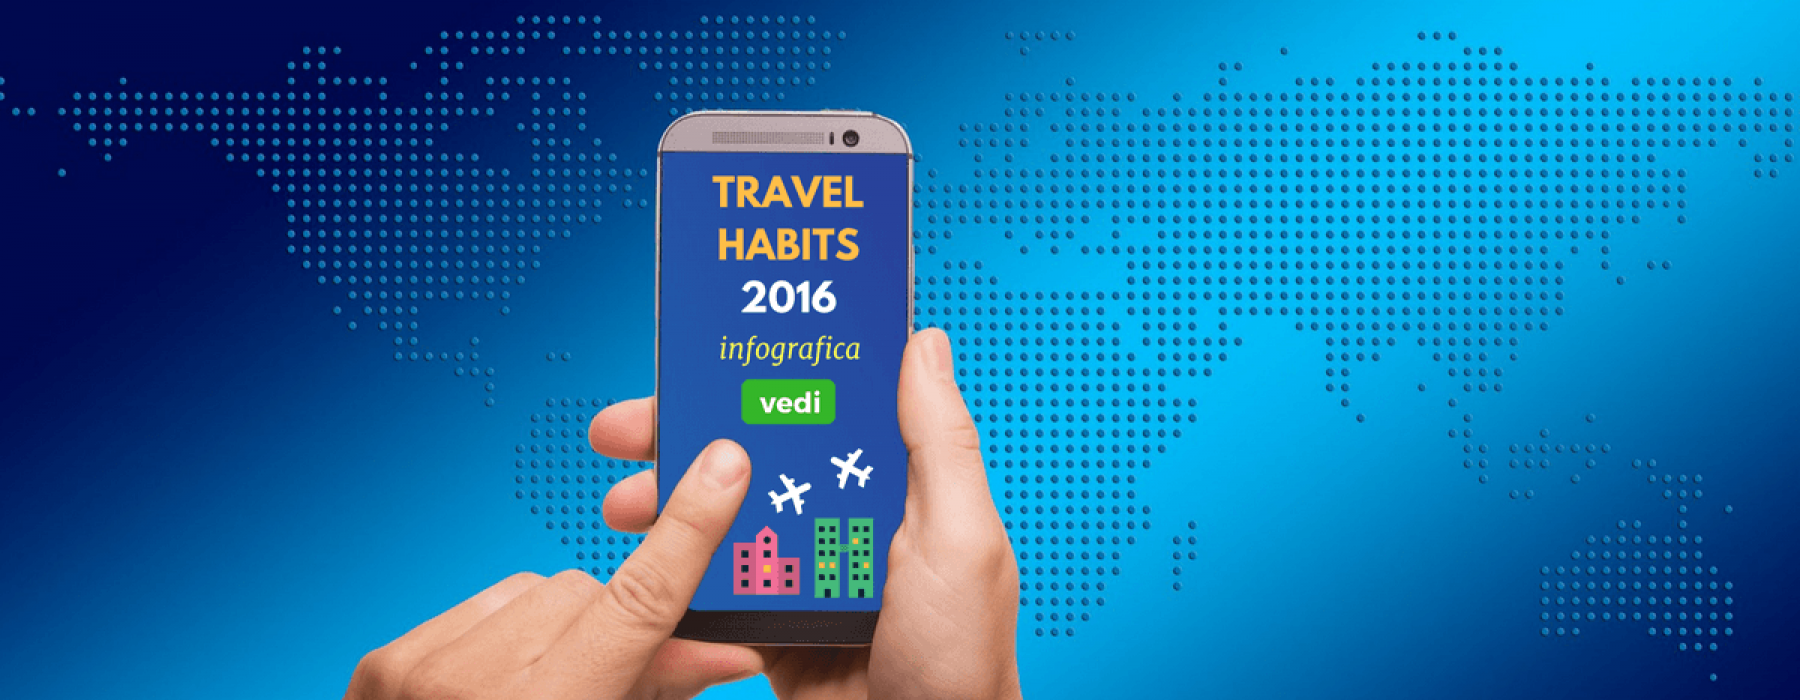 travelhabits2016